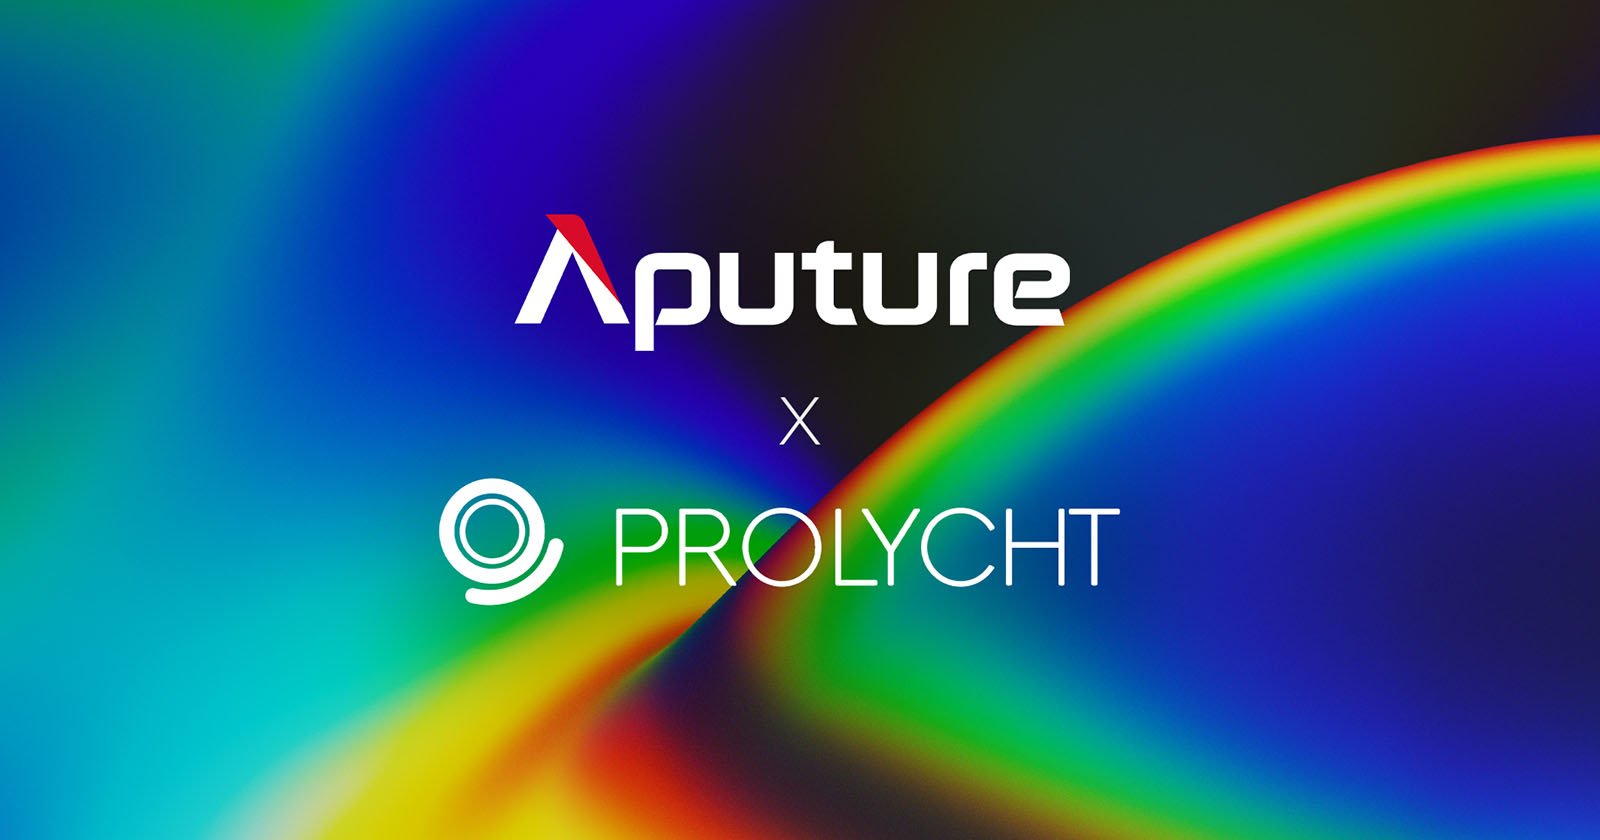  aputure has acquired film led lighting maker 